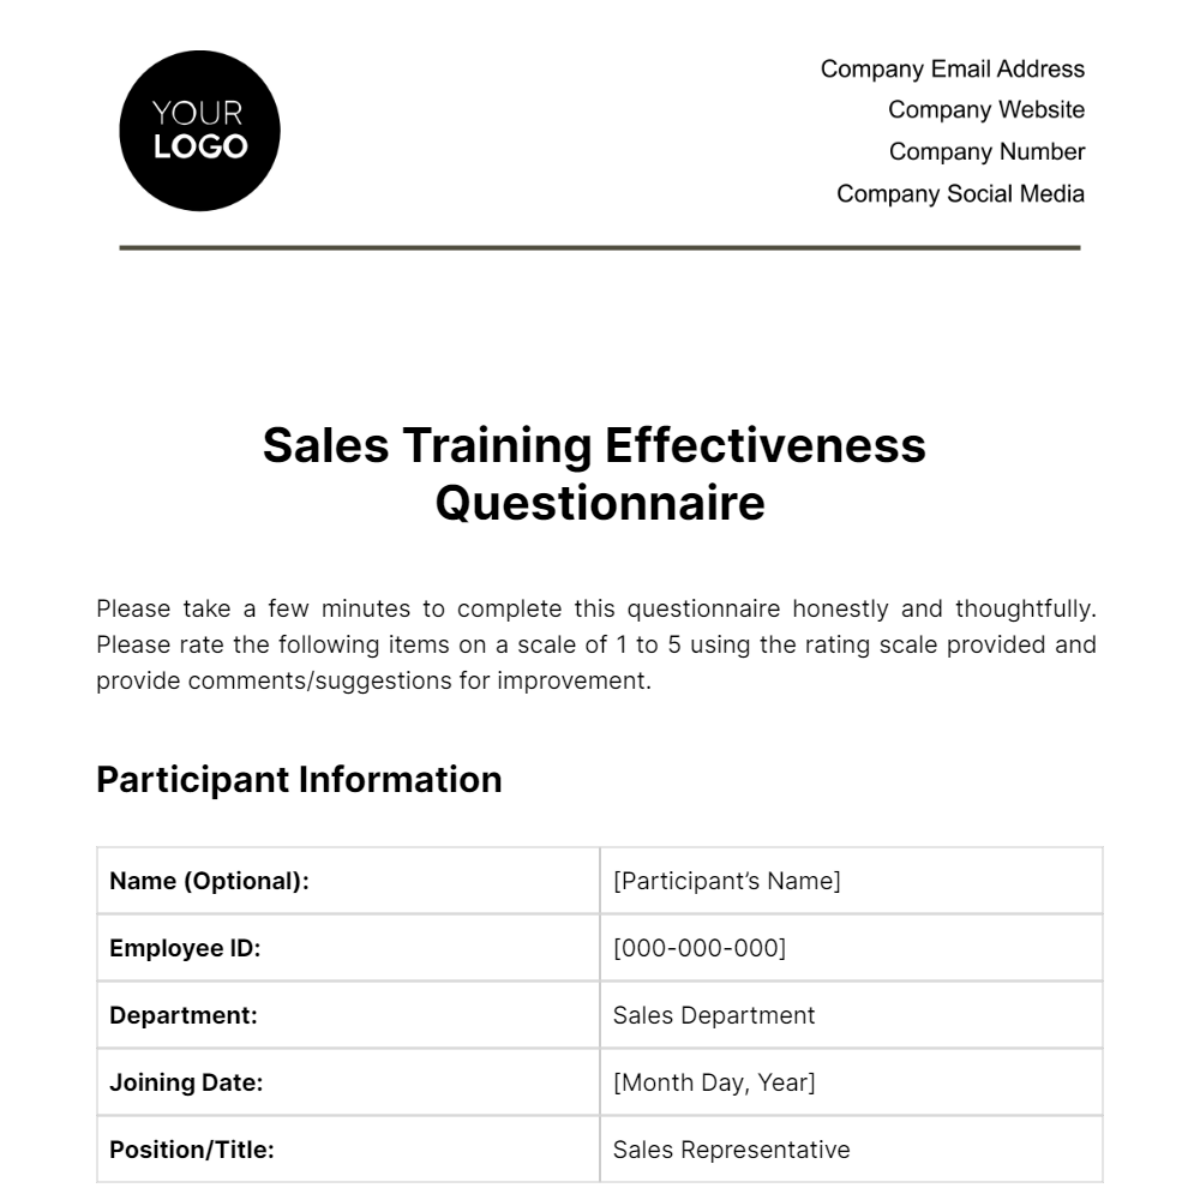 Sales Training Effectiveness Questionnaire Template